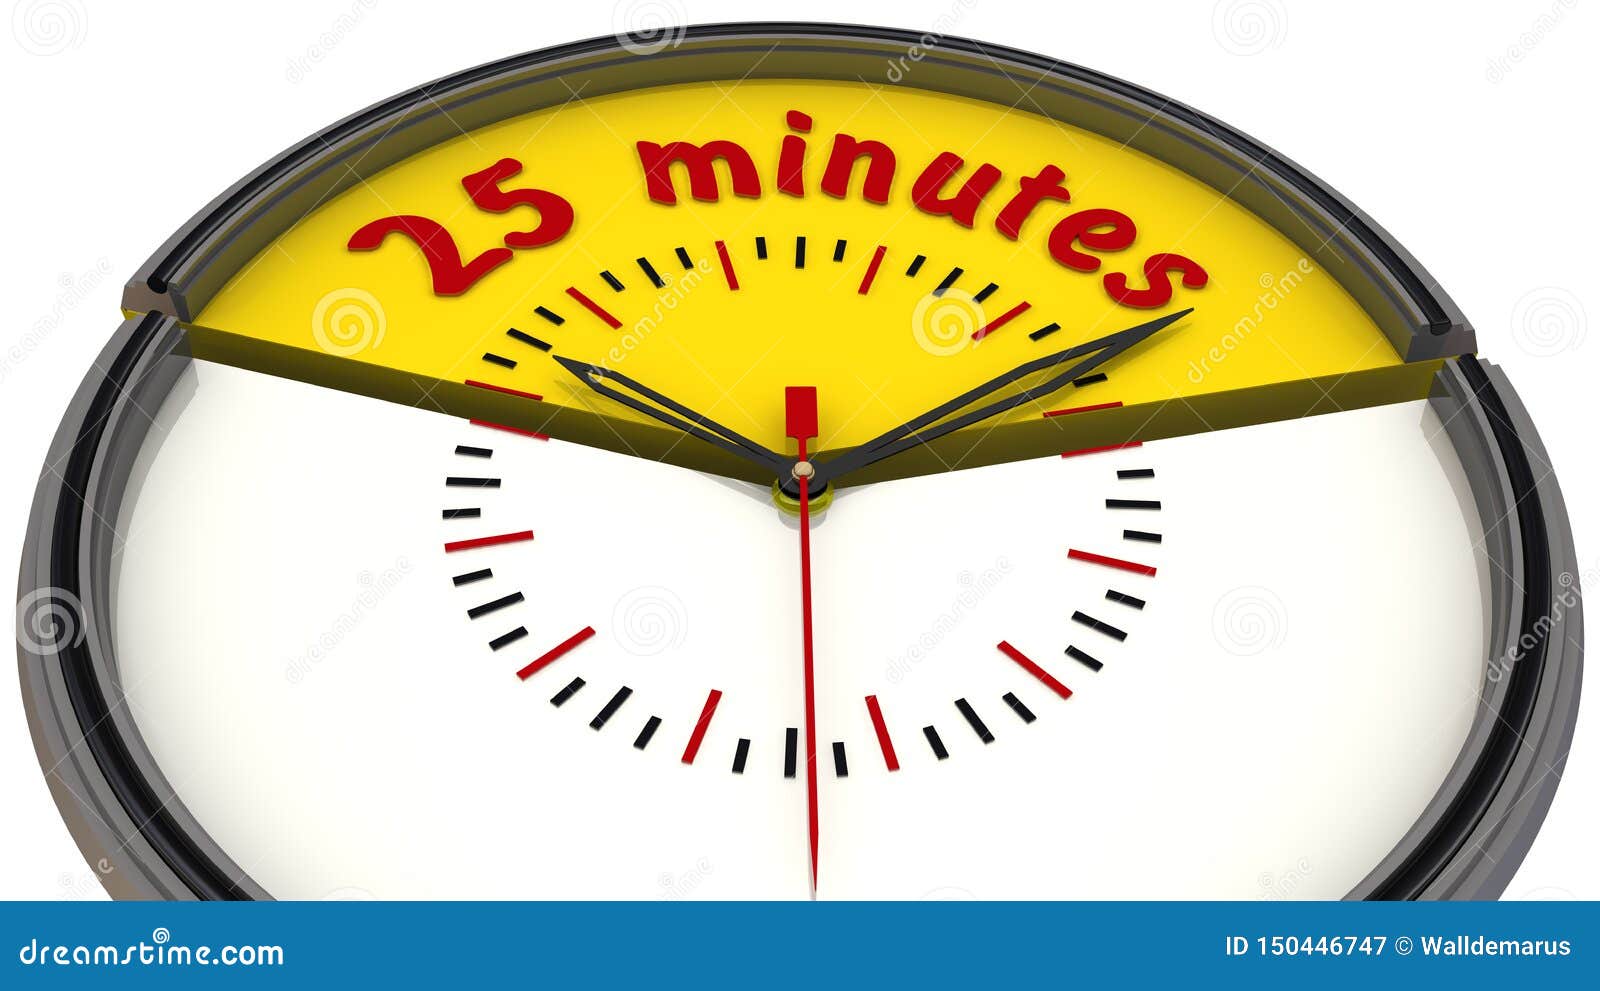 Включи на 5 минут 25. Часы 25 минут. 20 Мин в часы. 20 Минут в часах. Таймер 25 минут.